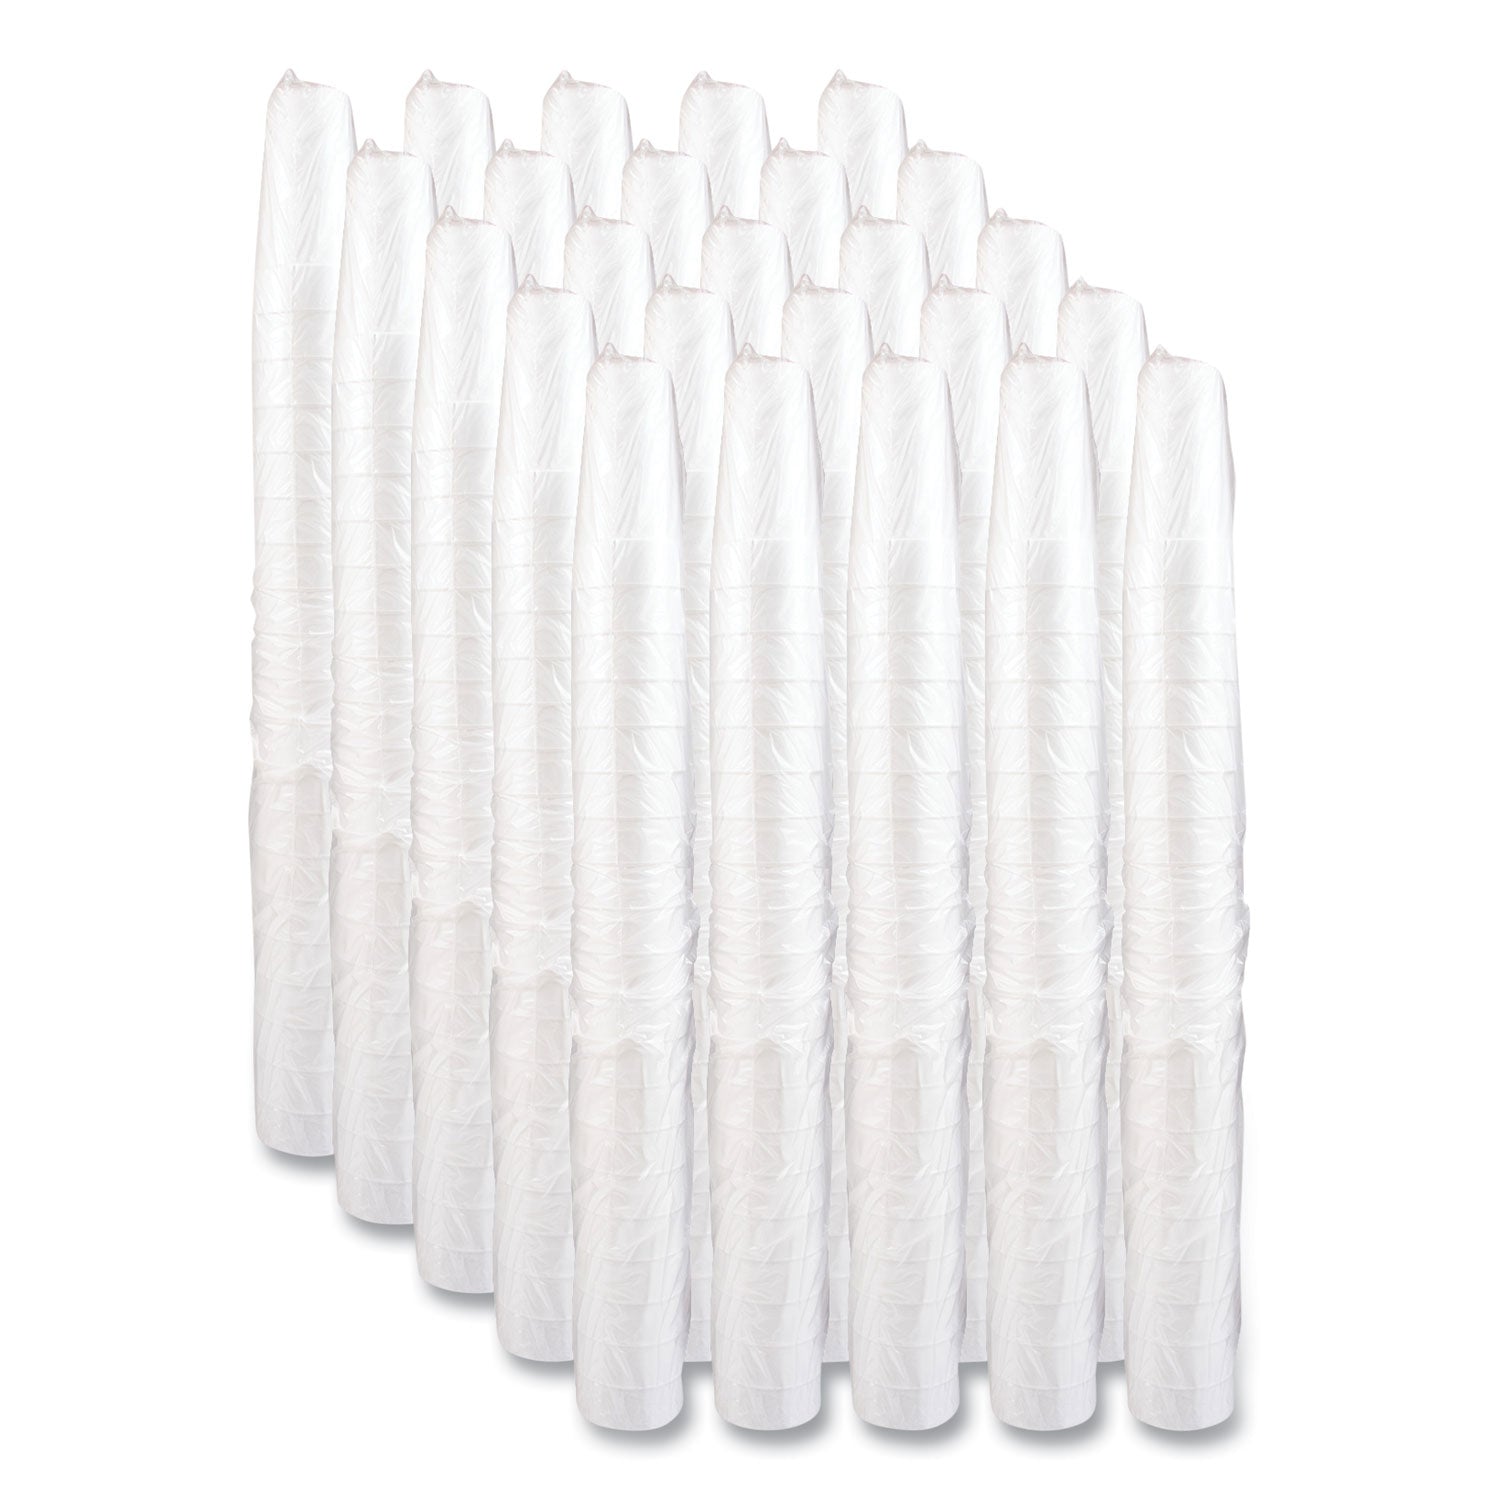 Foam Drink Cups, Hot/Cold, 24 oz, White, 25/Bag, 20 Bags/Carton - 